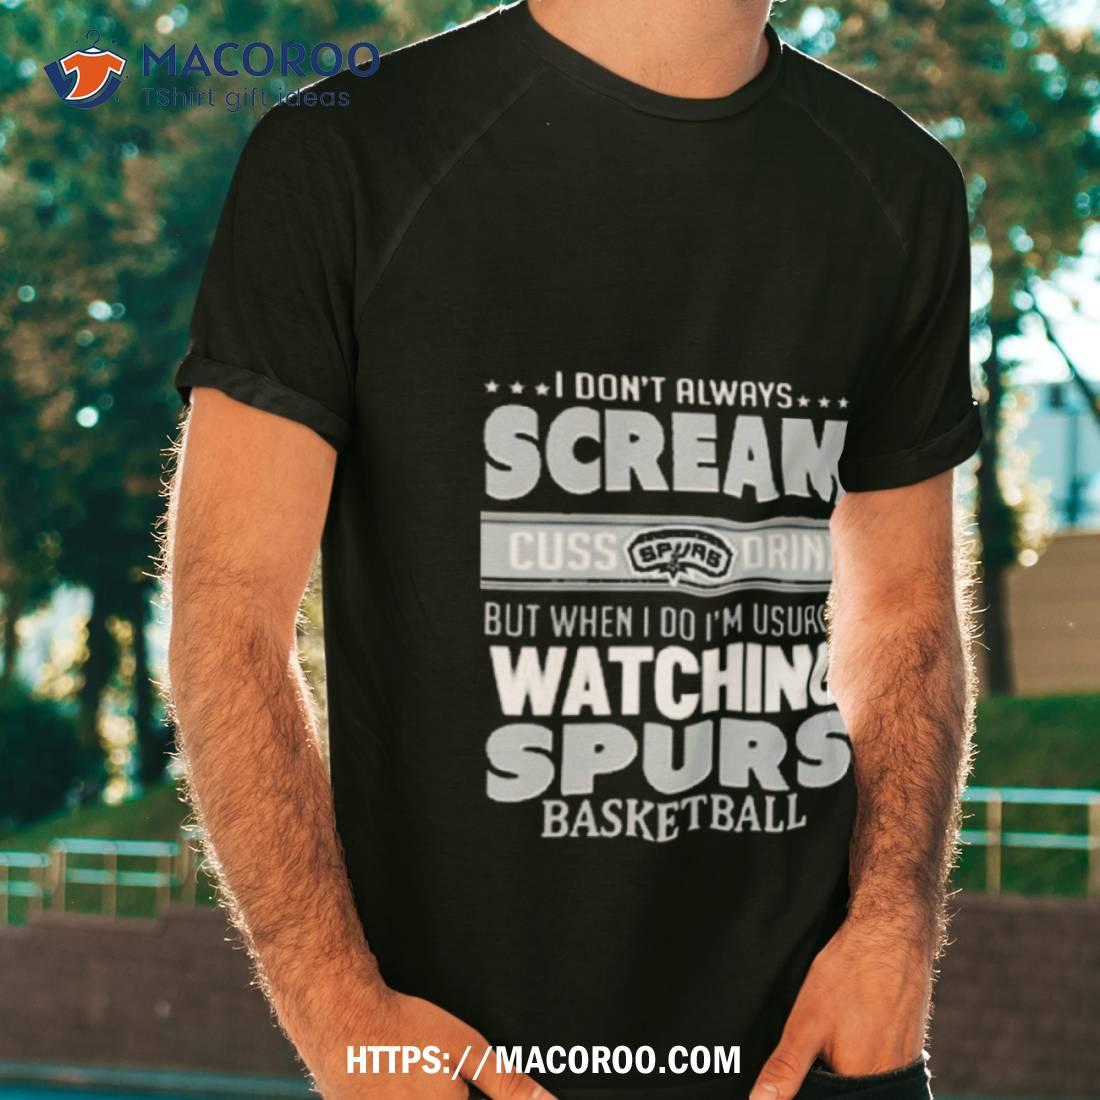 NBA basketball tshirt